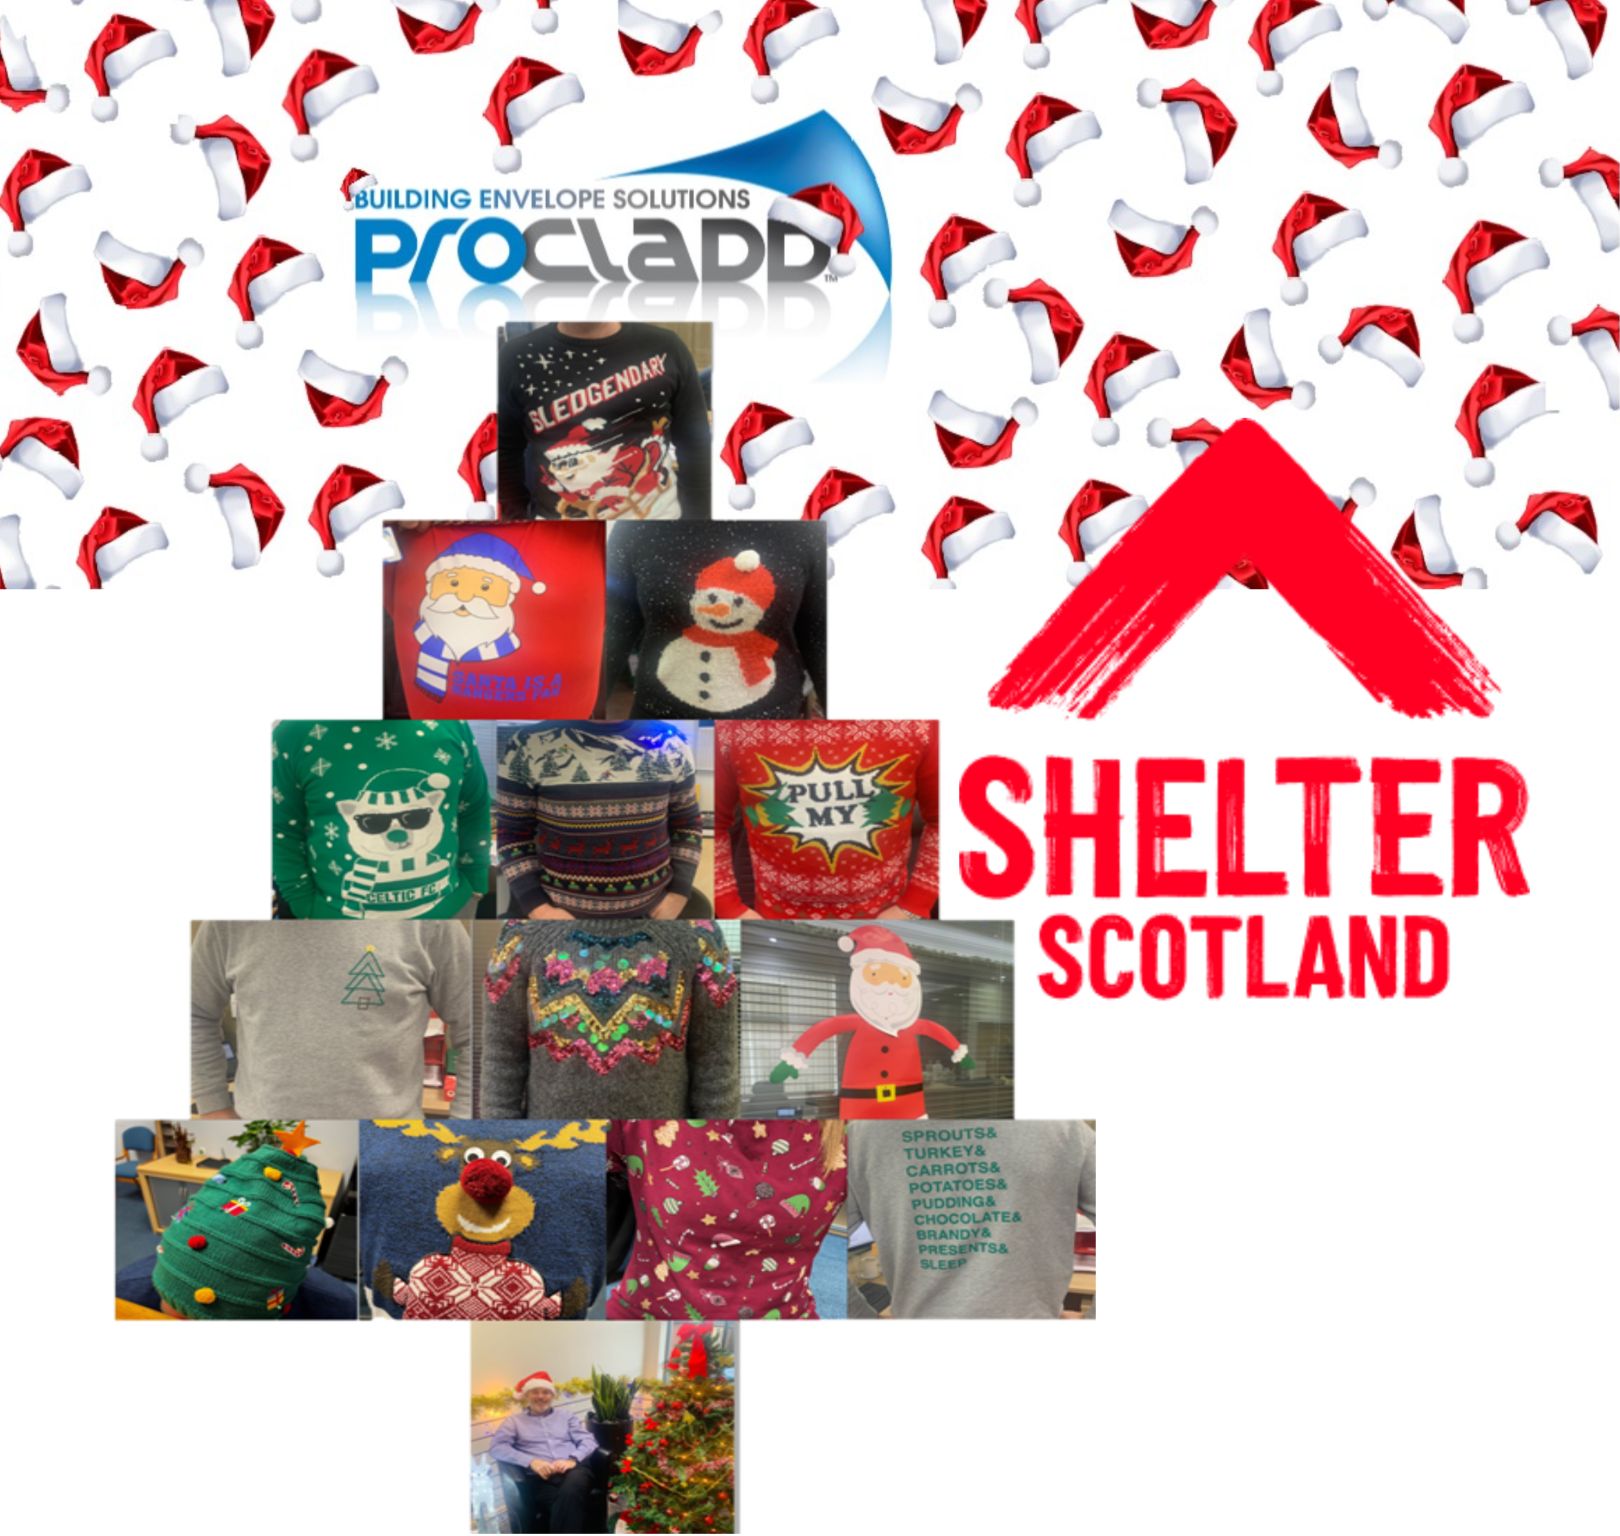 Procladd Shelter Scotland